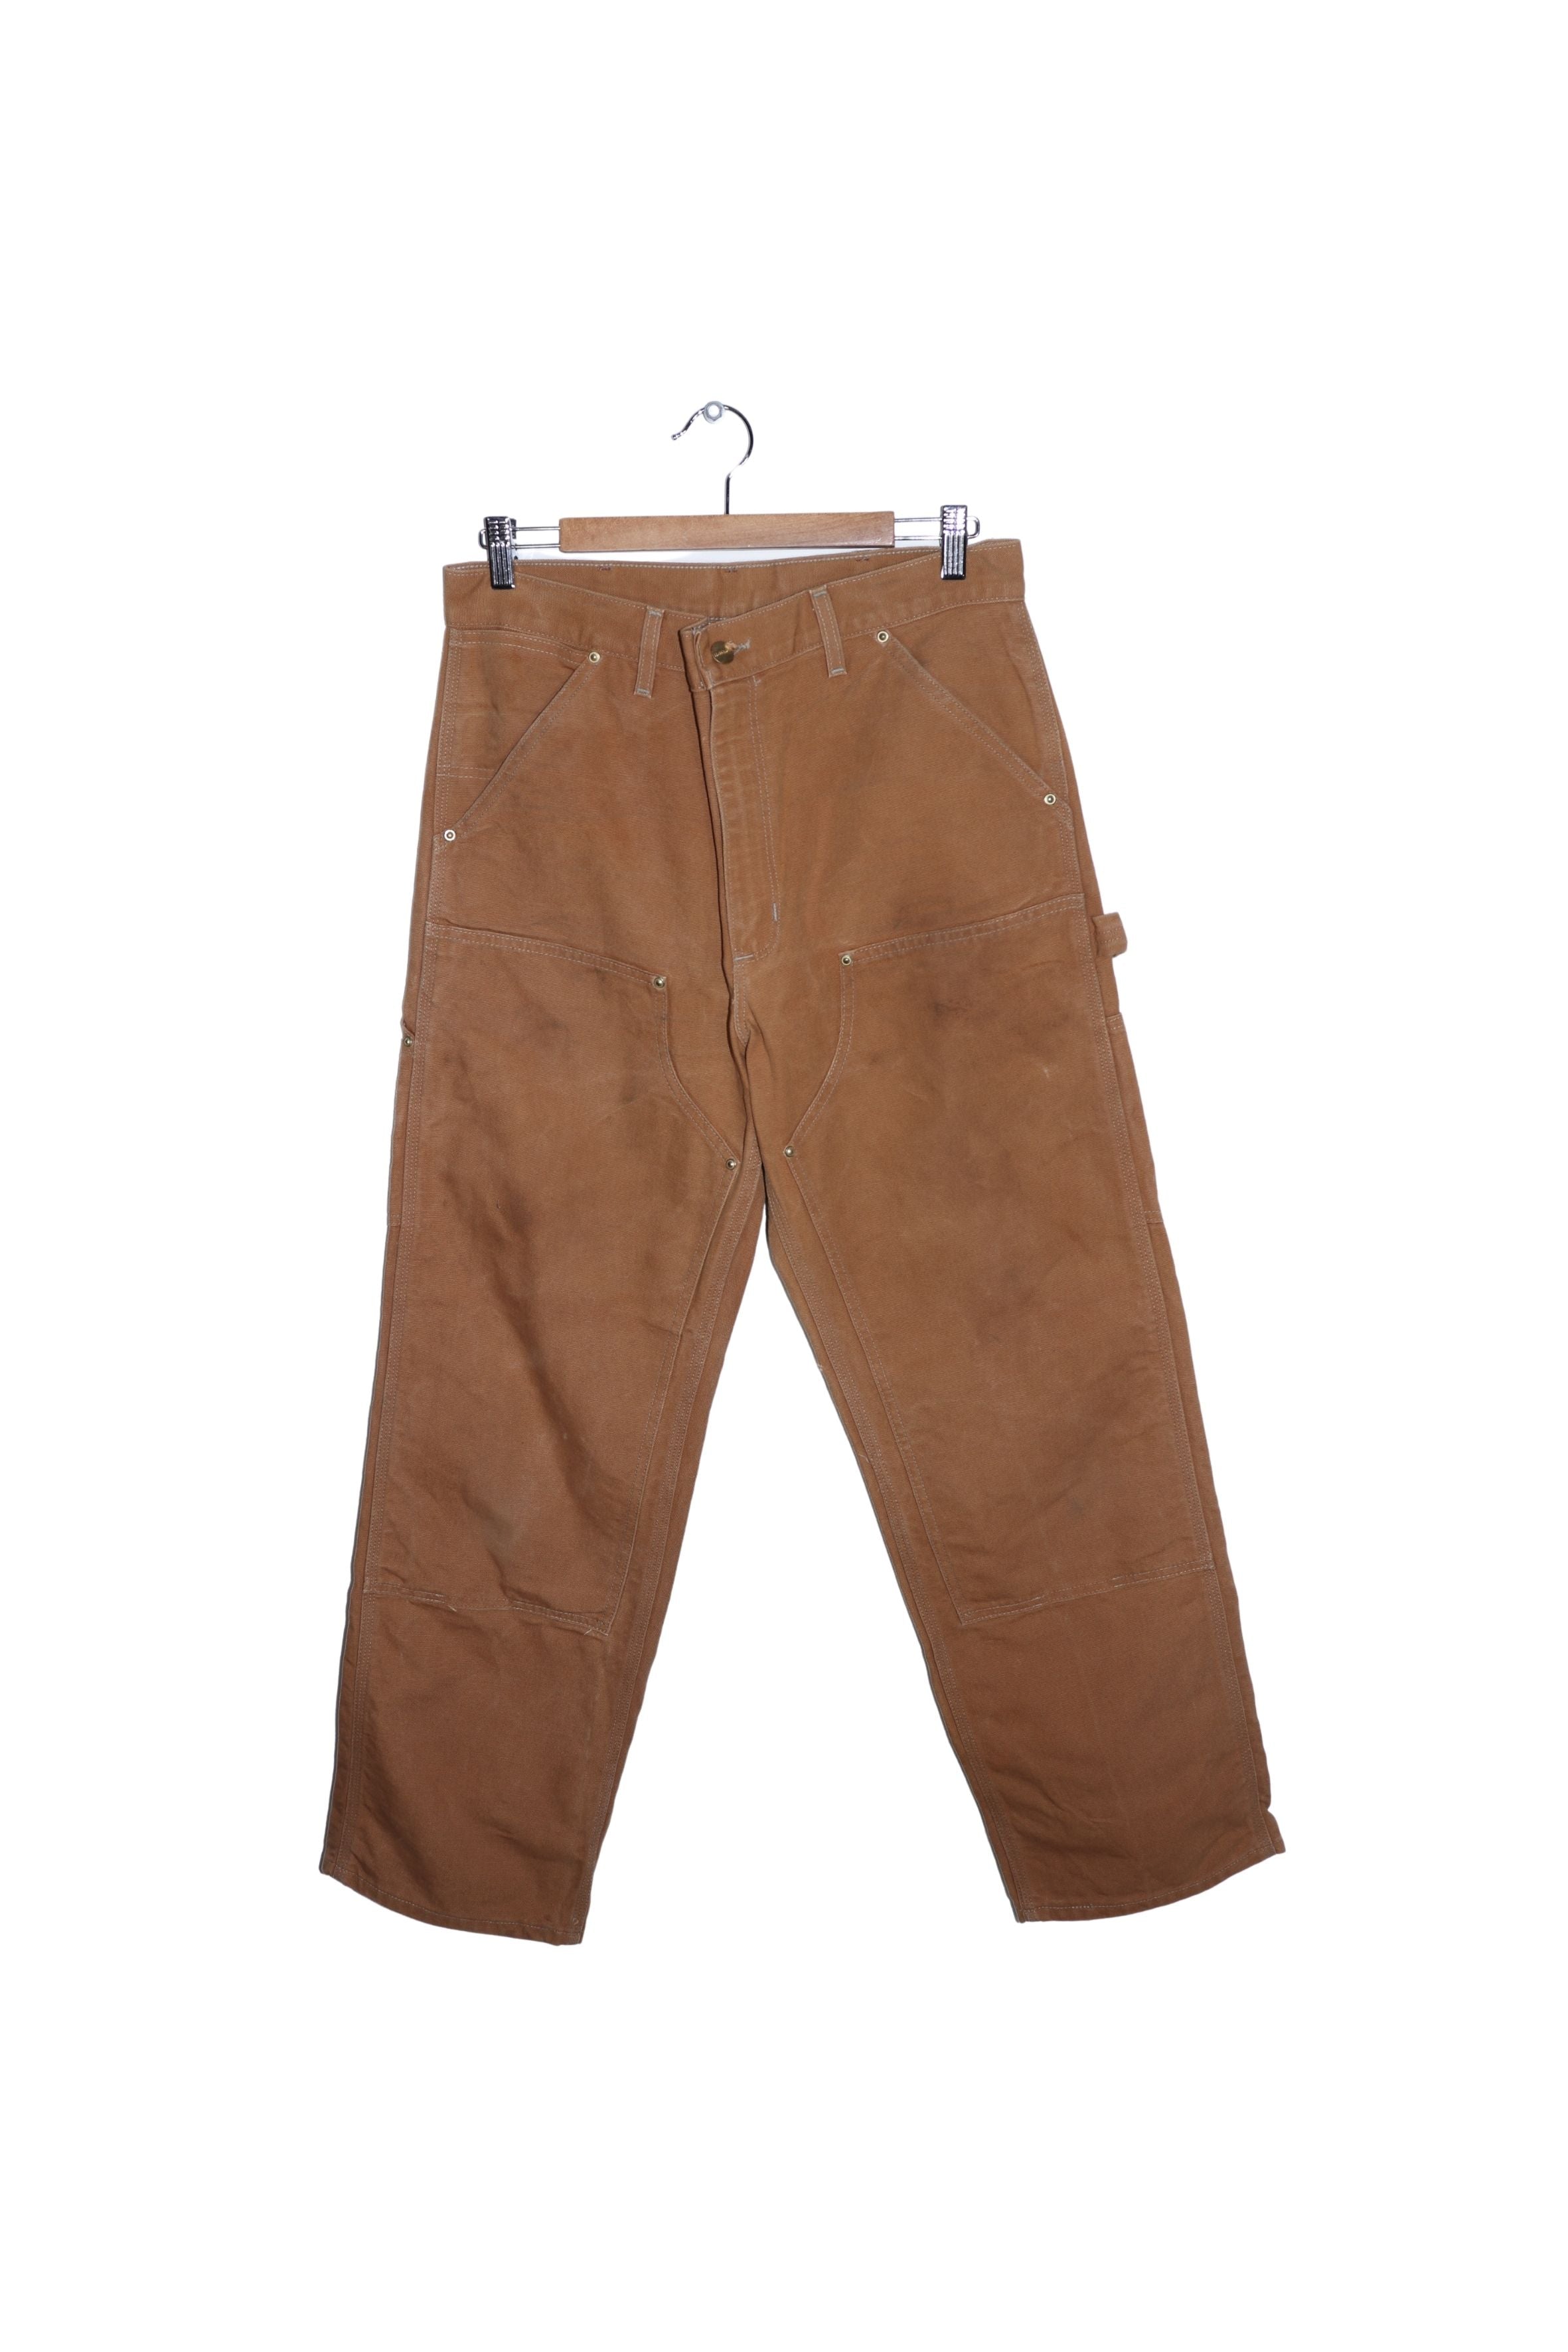 Vintage 80s Carhartt Light Brown Double Knee Thick Carpenter Pants 34 X 32